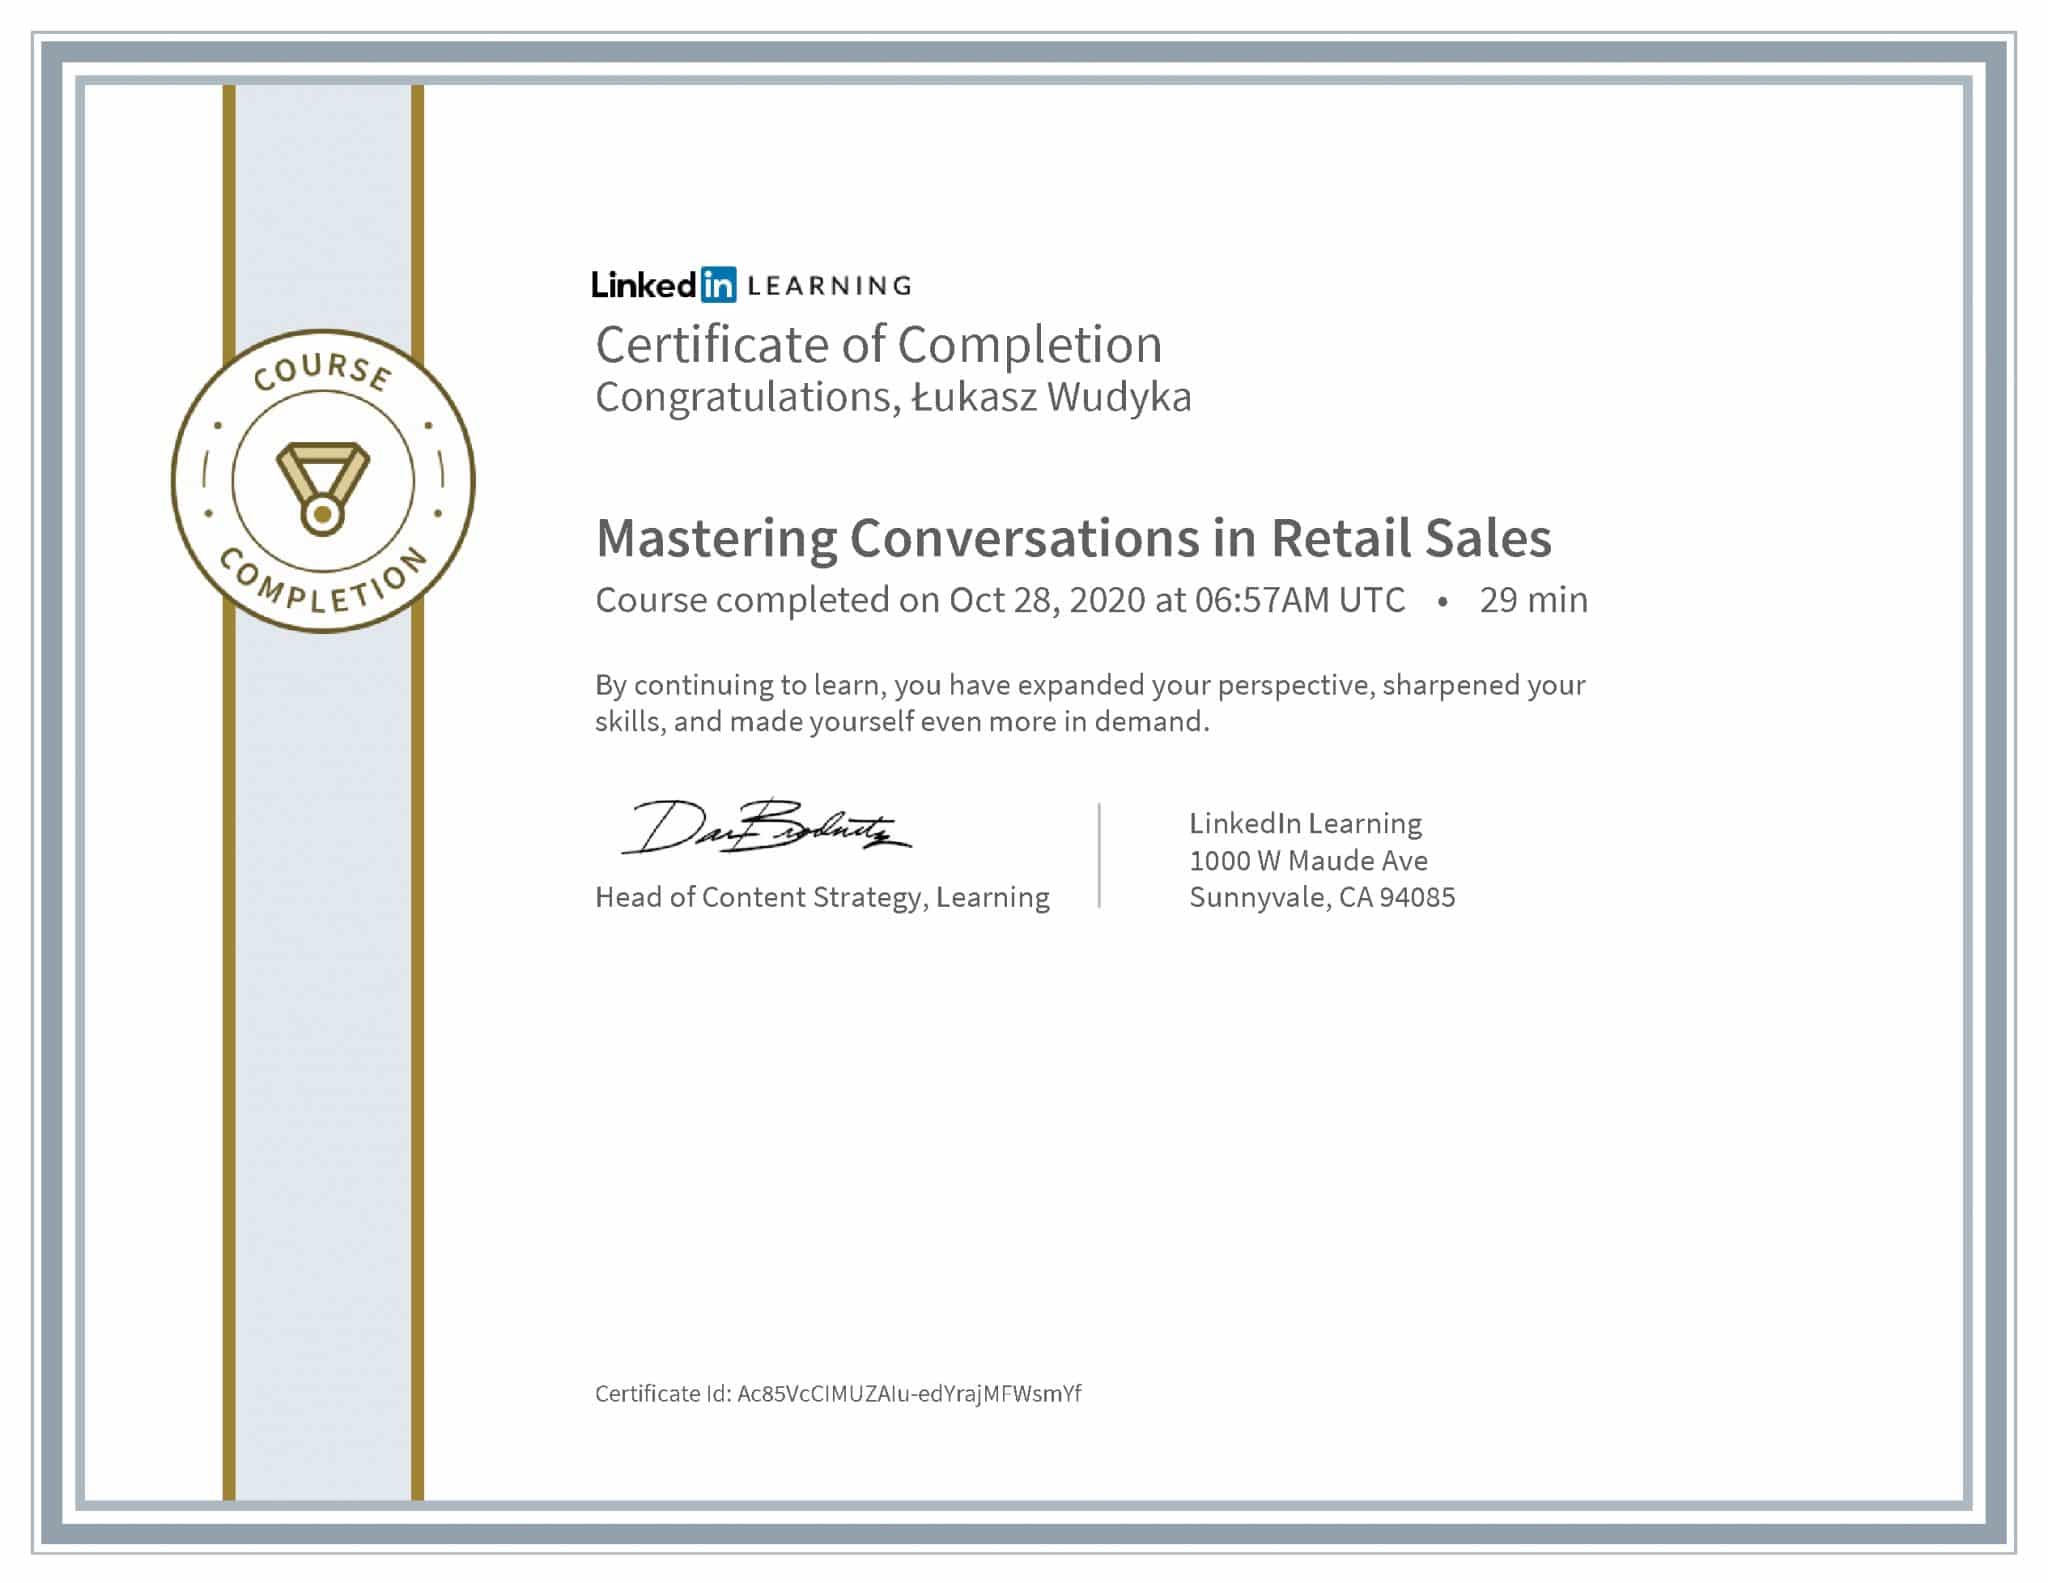 Łukasz Wudyka certyfikat LinkedIn Mastering Conversations in Retail Sales